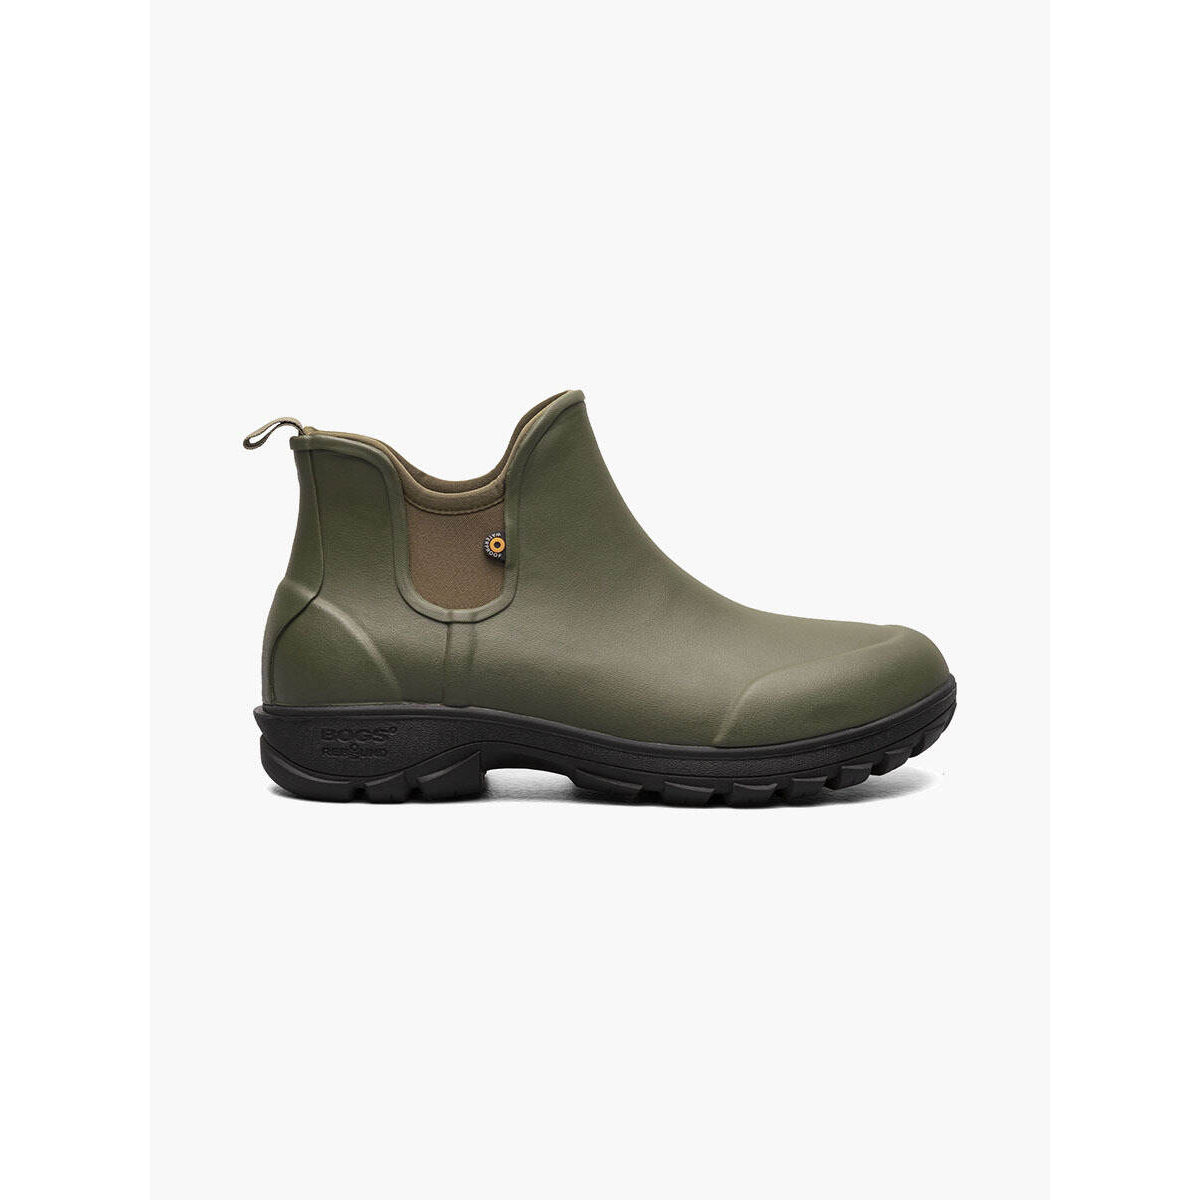 BOGS Men's Sauvie Slip On Insulated Waterproof Rain Boot Olive Multi - 72208-302 - OLIVE MLTI, 10